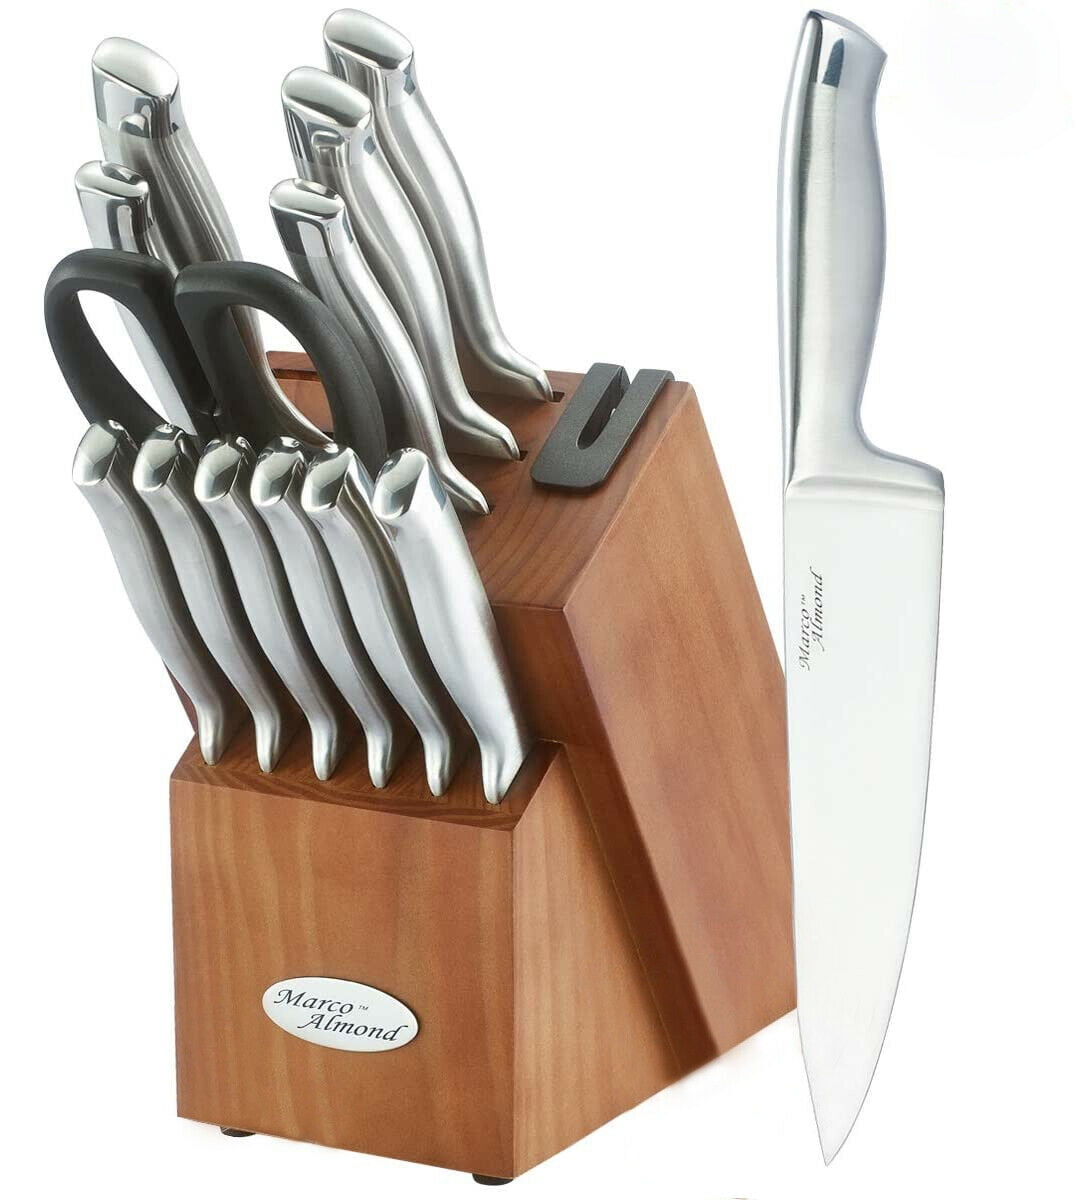 McCook MC39 Knife Set with Built-in Sharpener, 14-Piece Triple Rivet Cutlery  Knife Block Set 